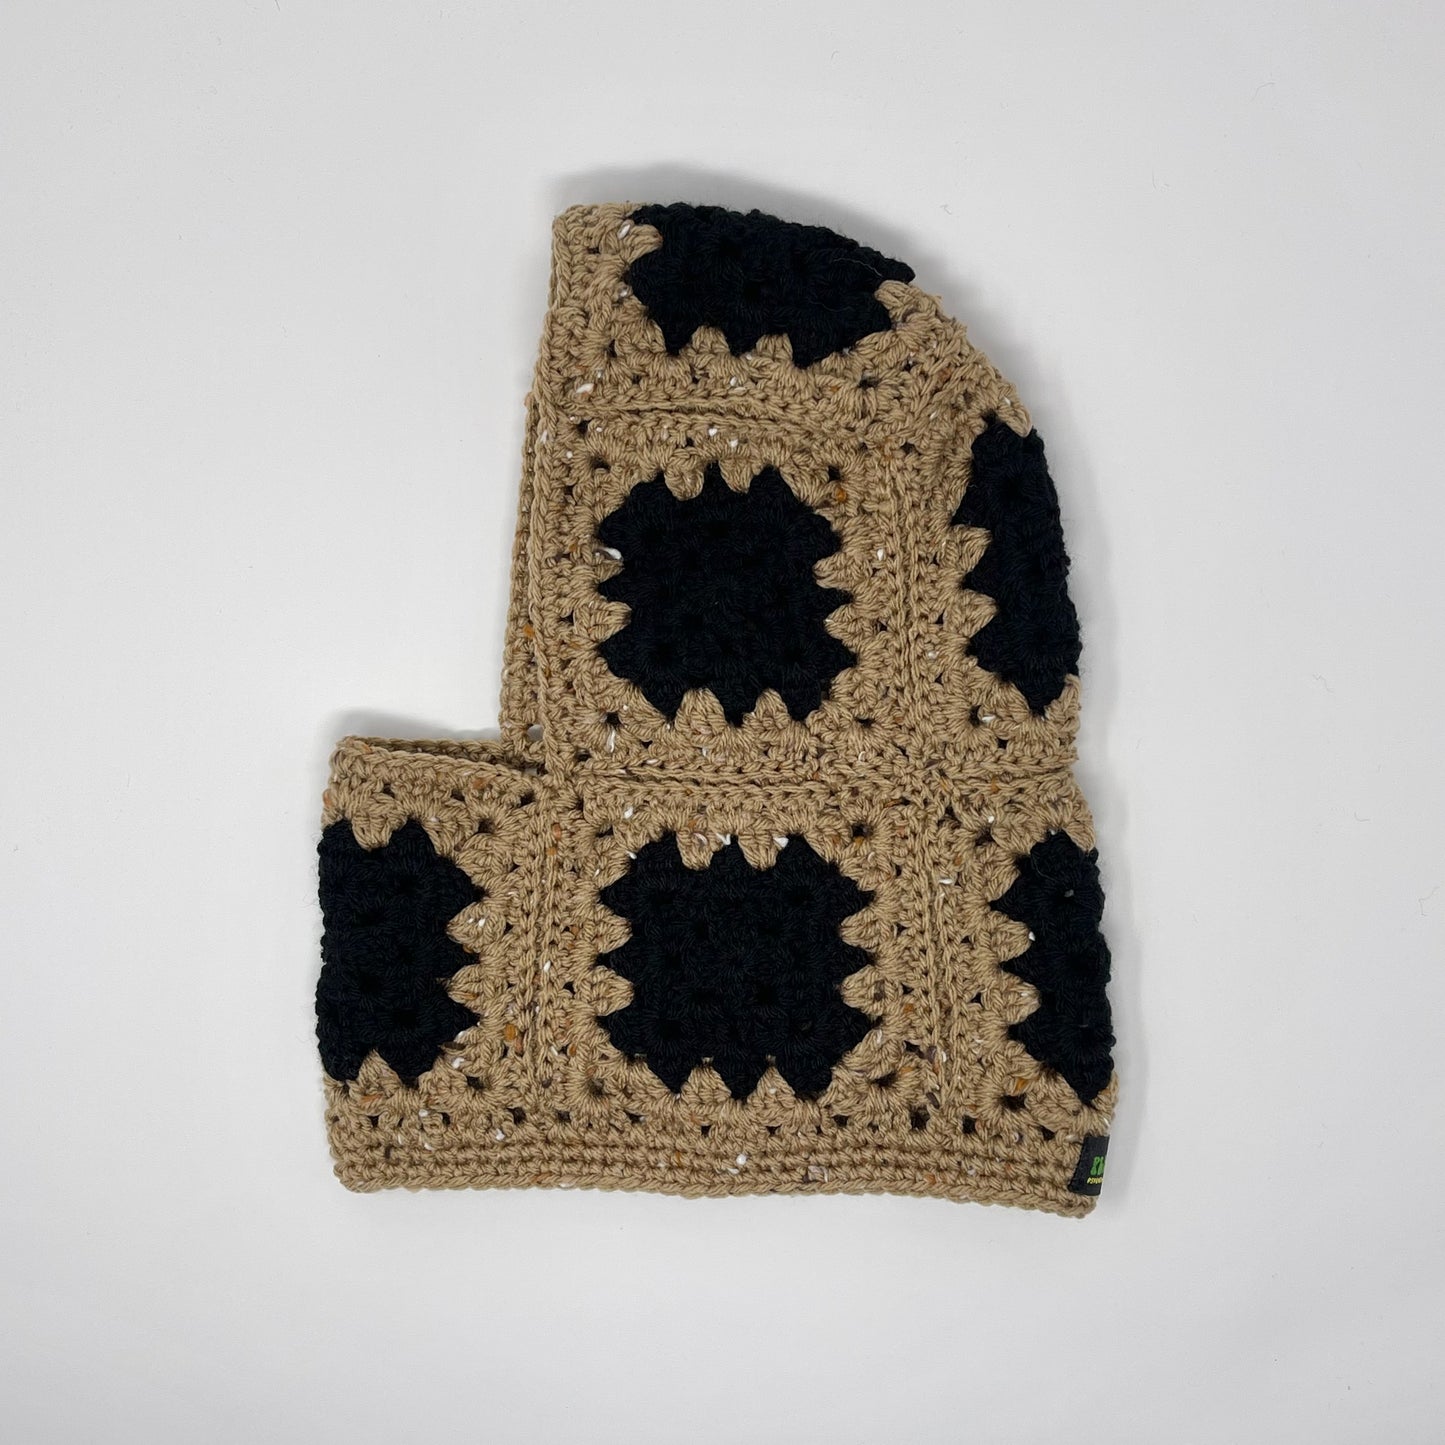 Crochet Balaclava - Mixed Beige and Black